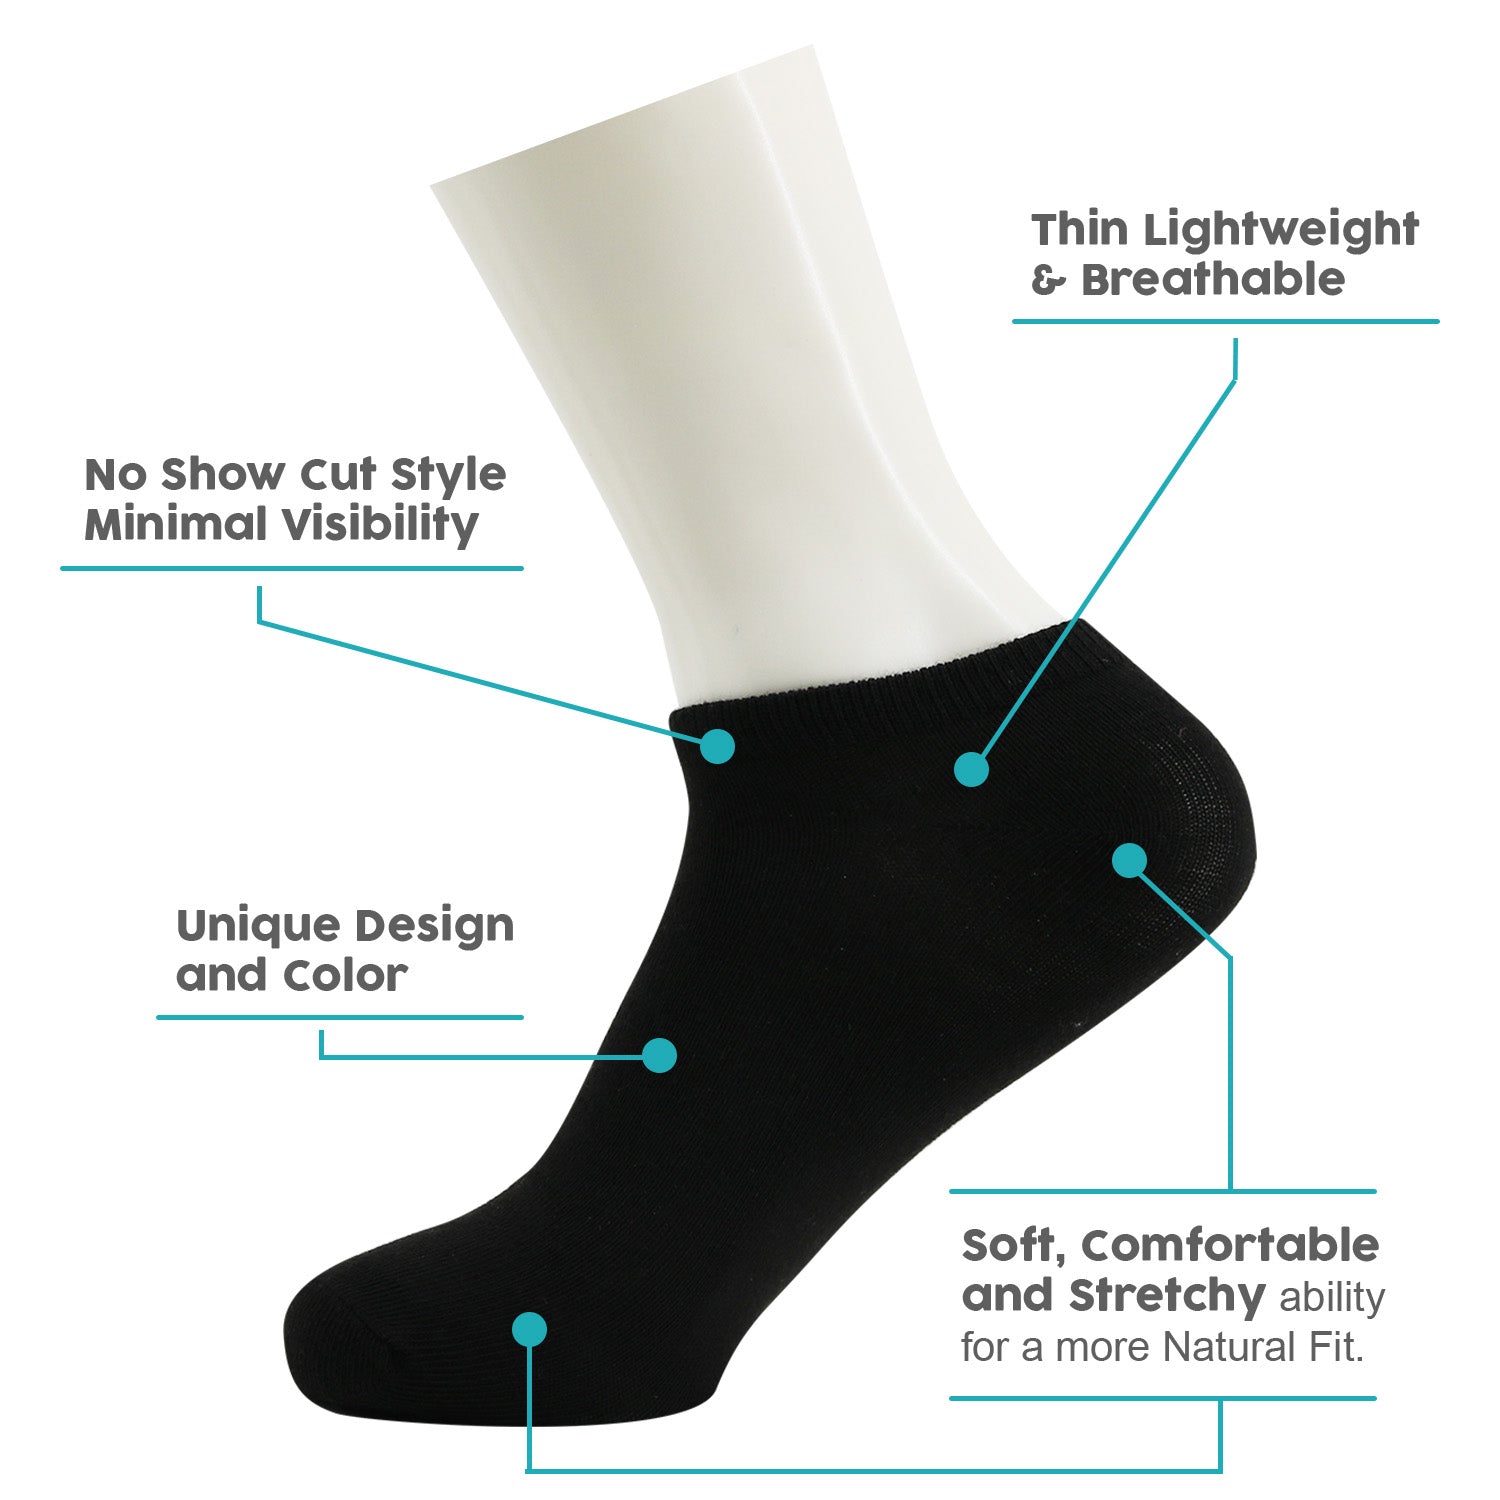 Men's No Show Wholesale Socks, Size 9-11 in Black - Bulk Case of 96 Pairs